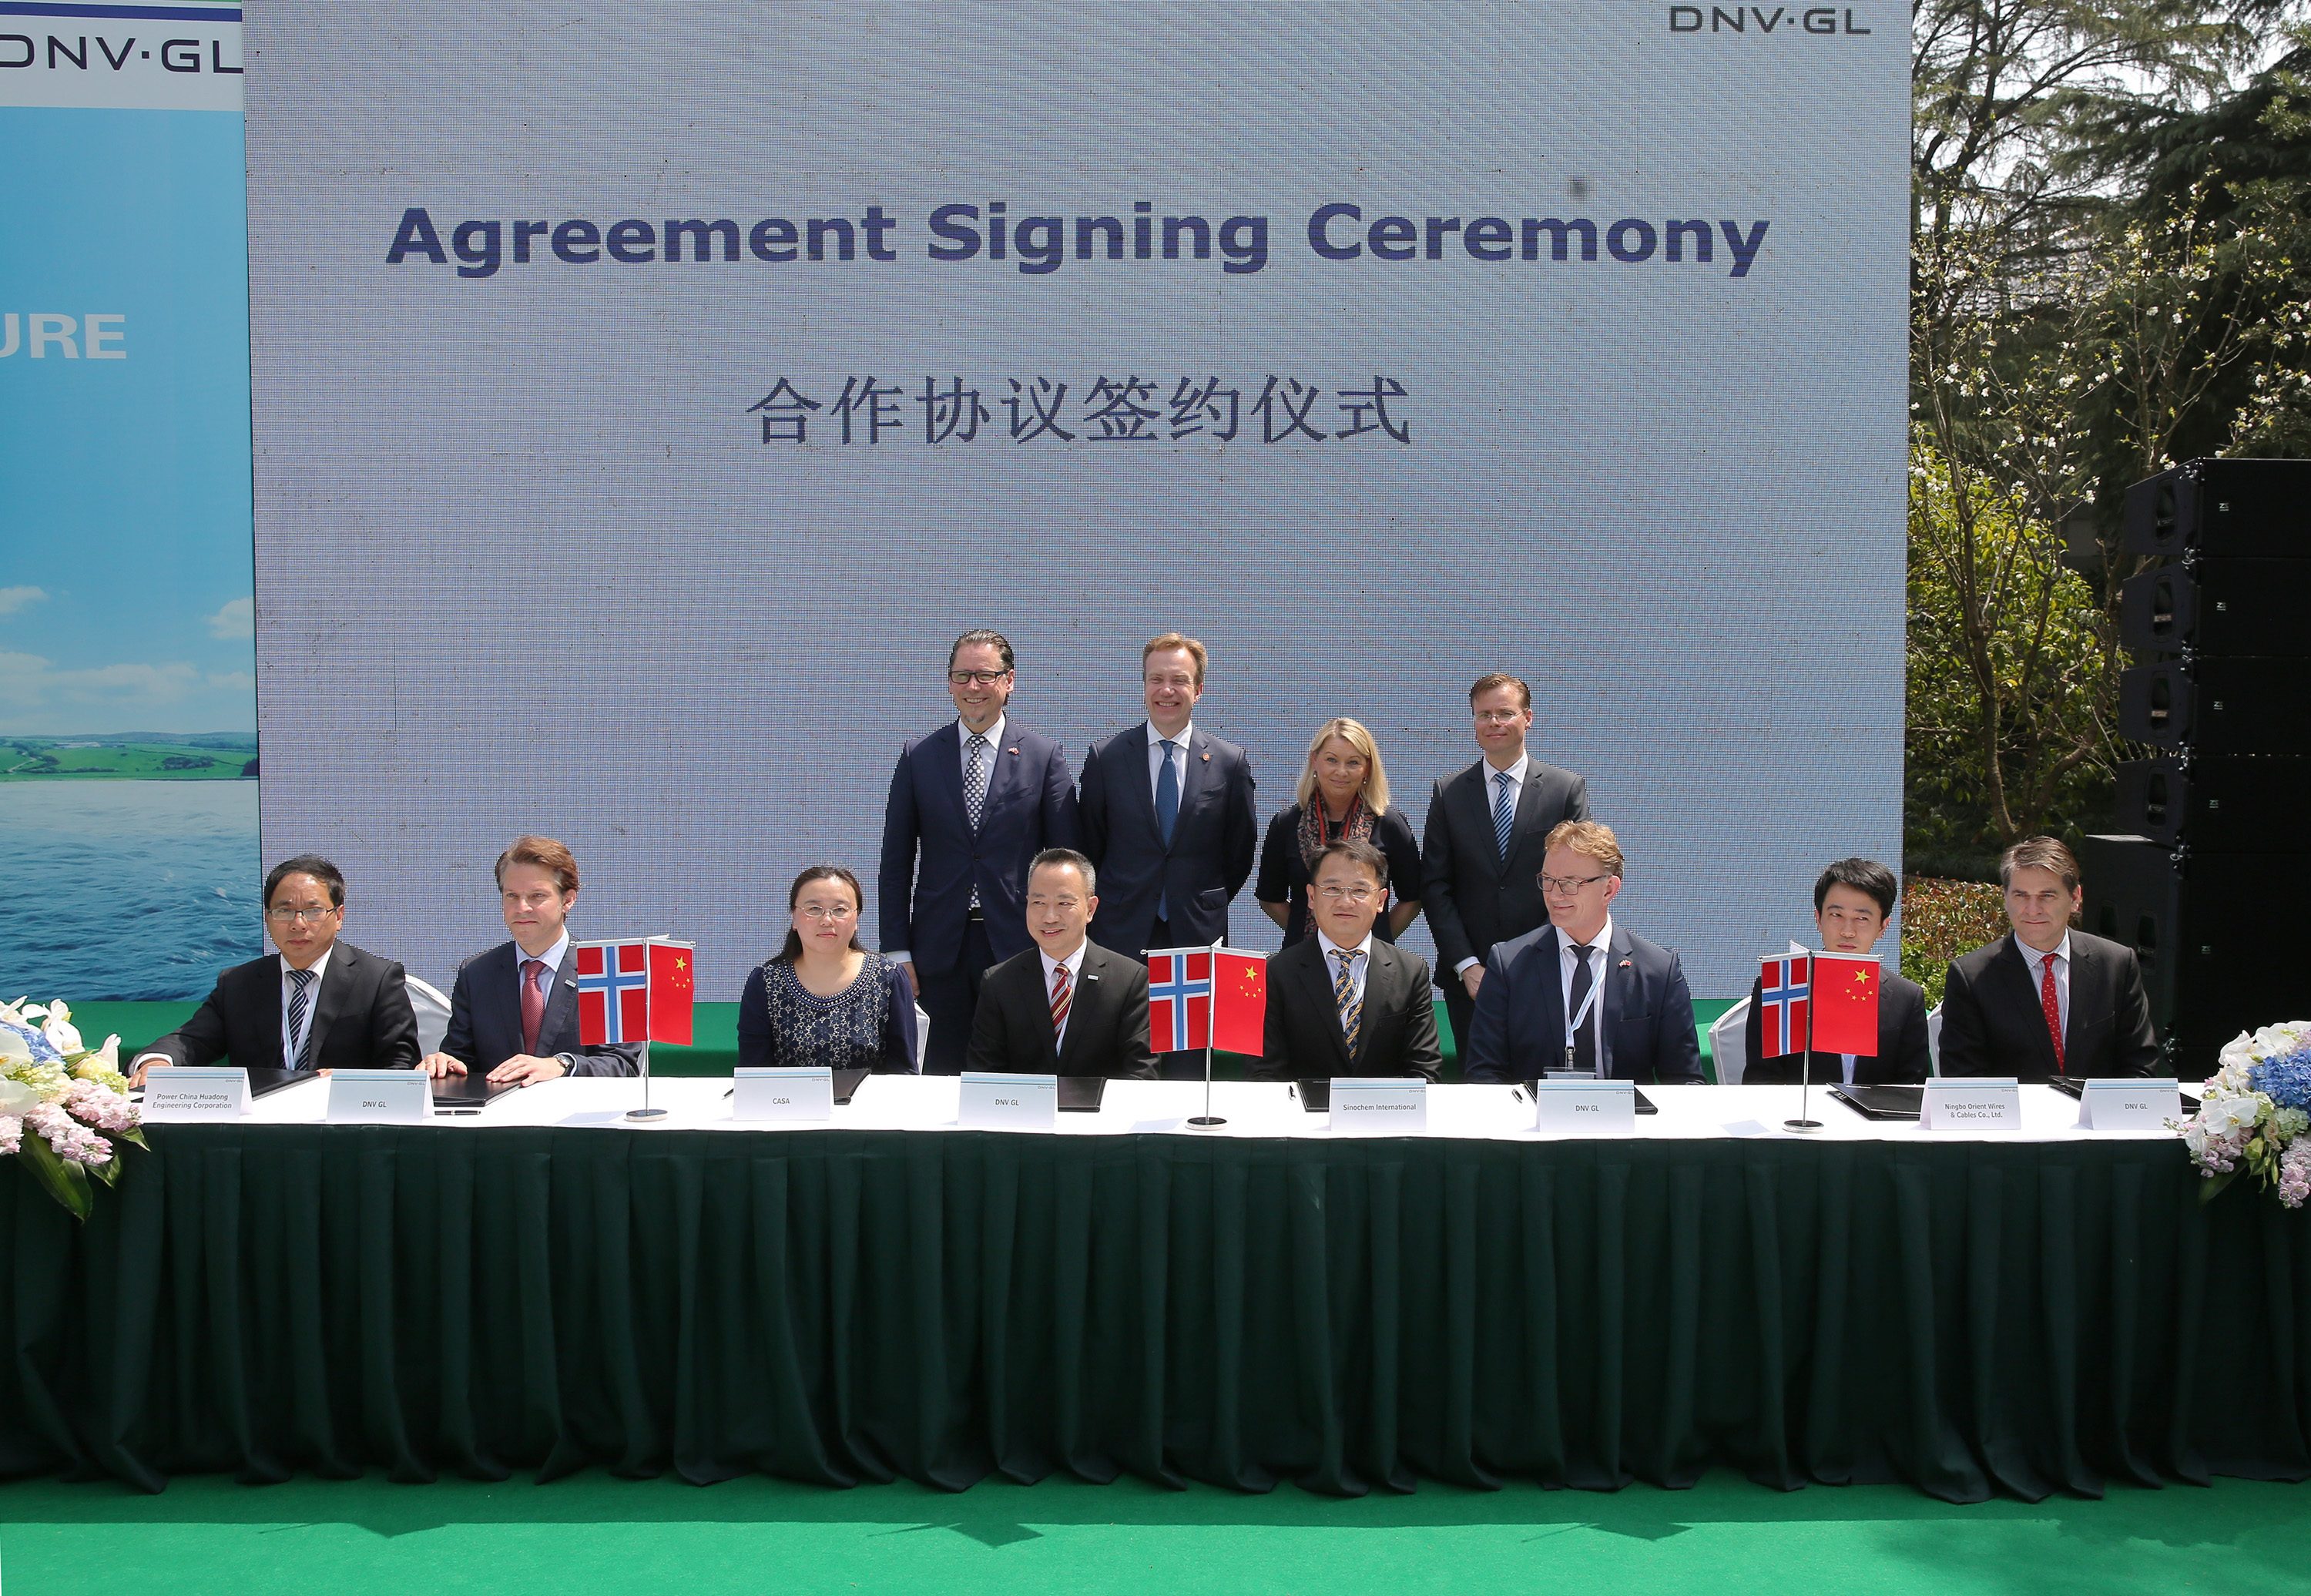 DNV GL signing agreements